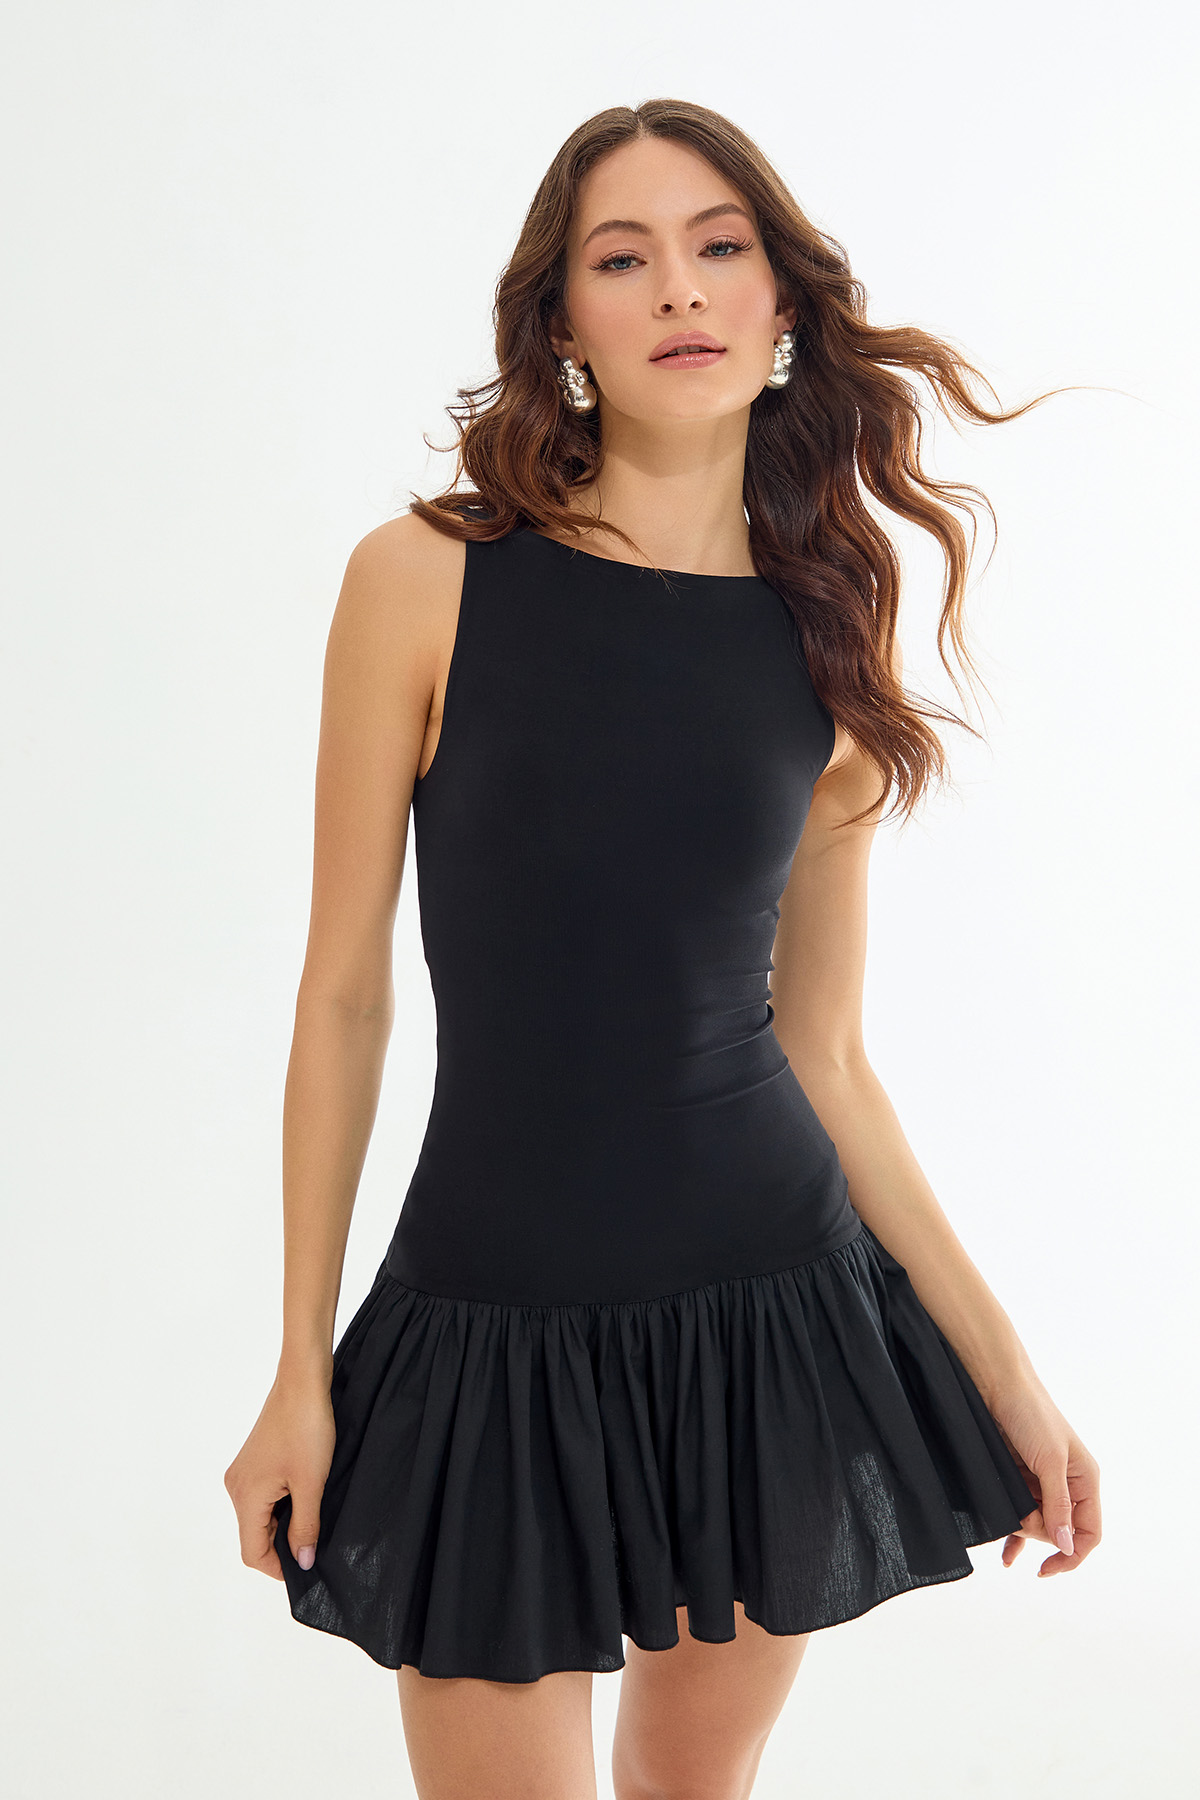 CARMELLA Poplin Detailed Mini Black Dress